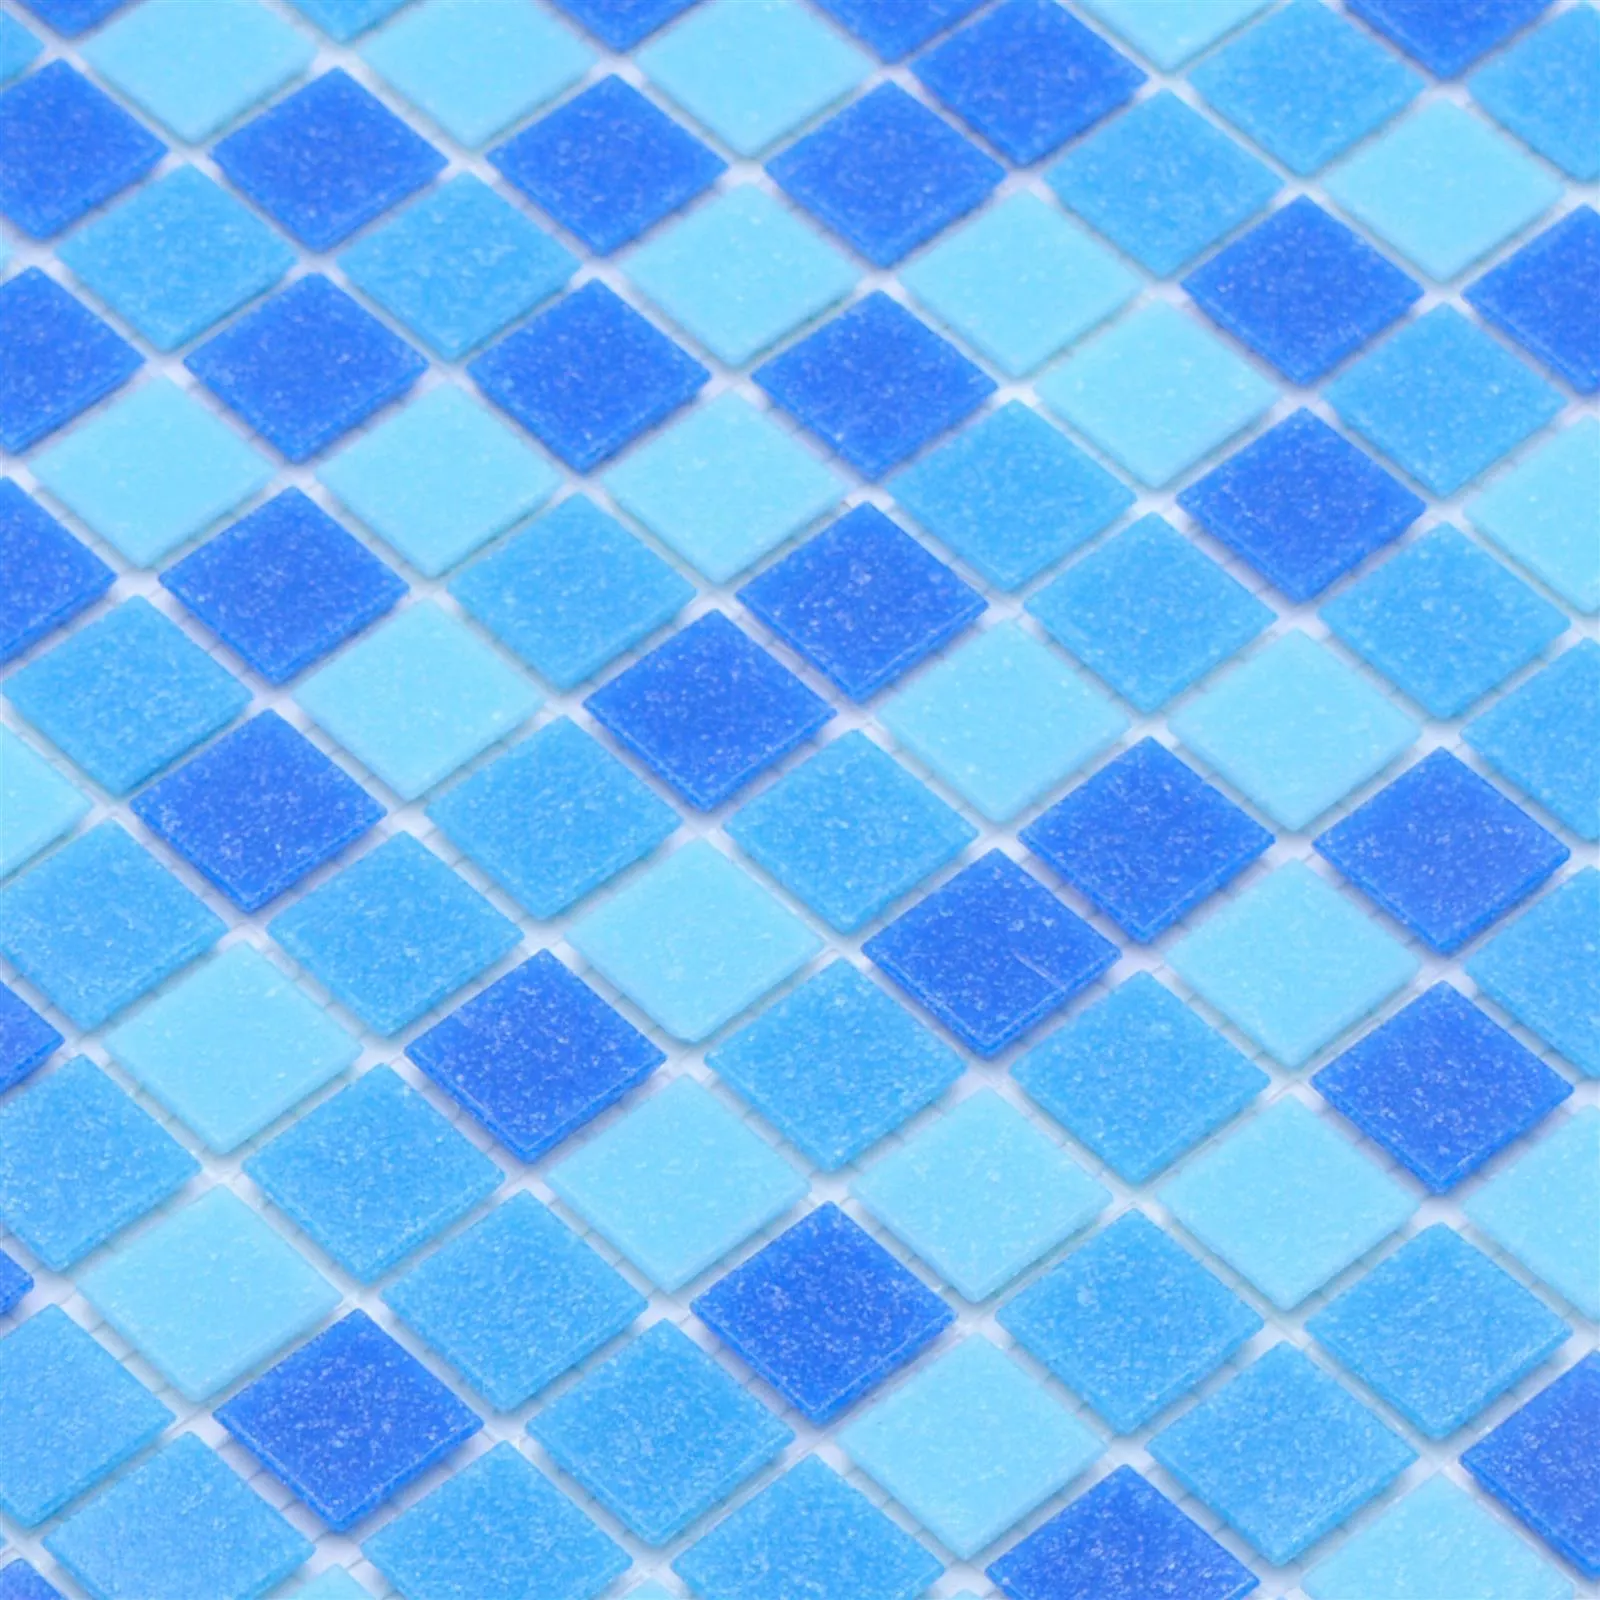 Sample Zwembad Mozaïek North Sea Blauw Turquoise Mix